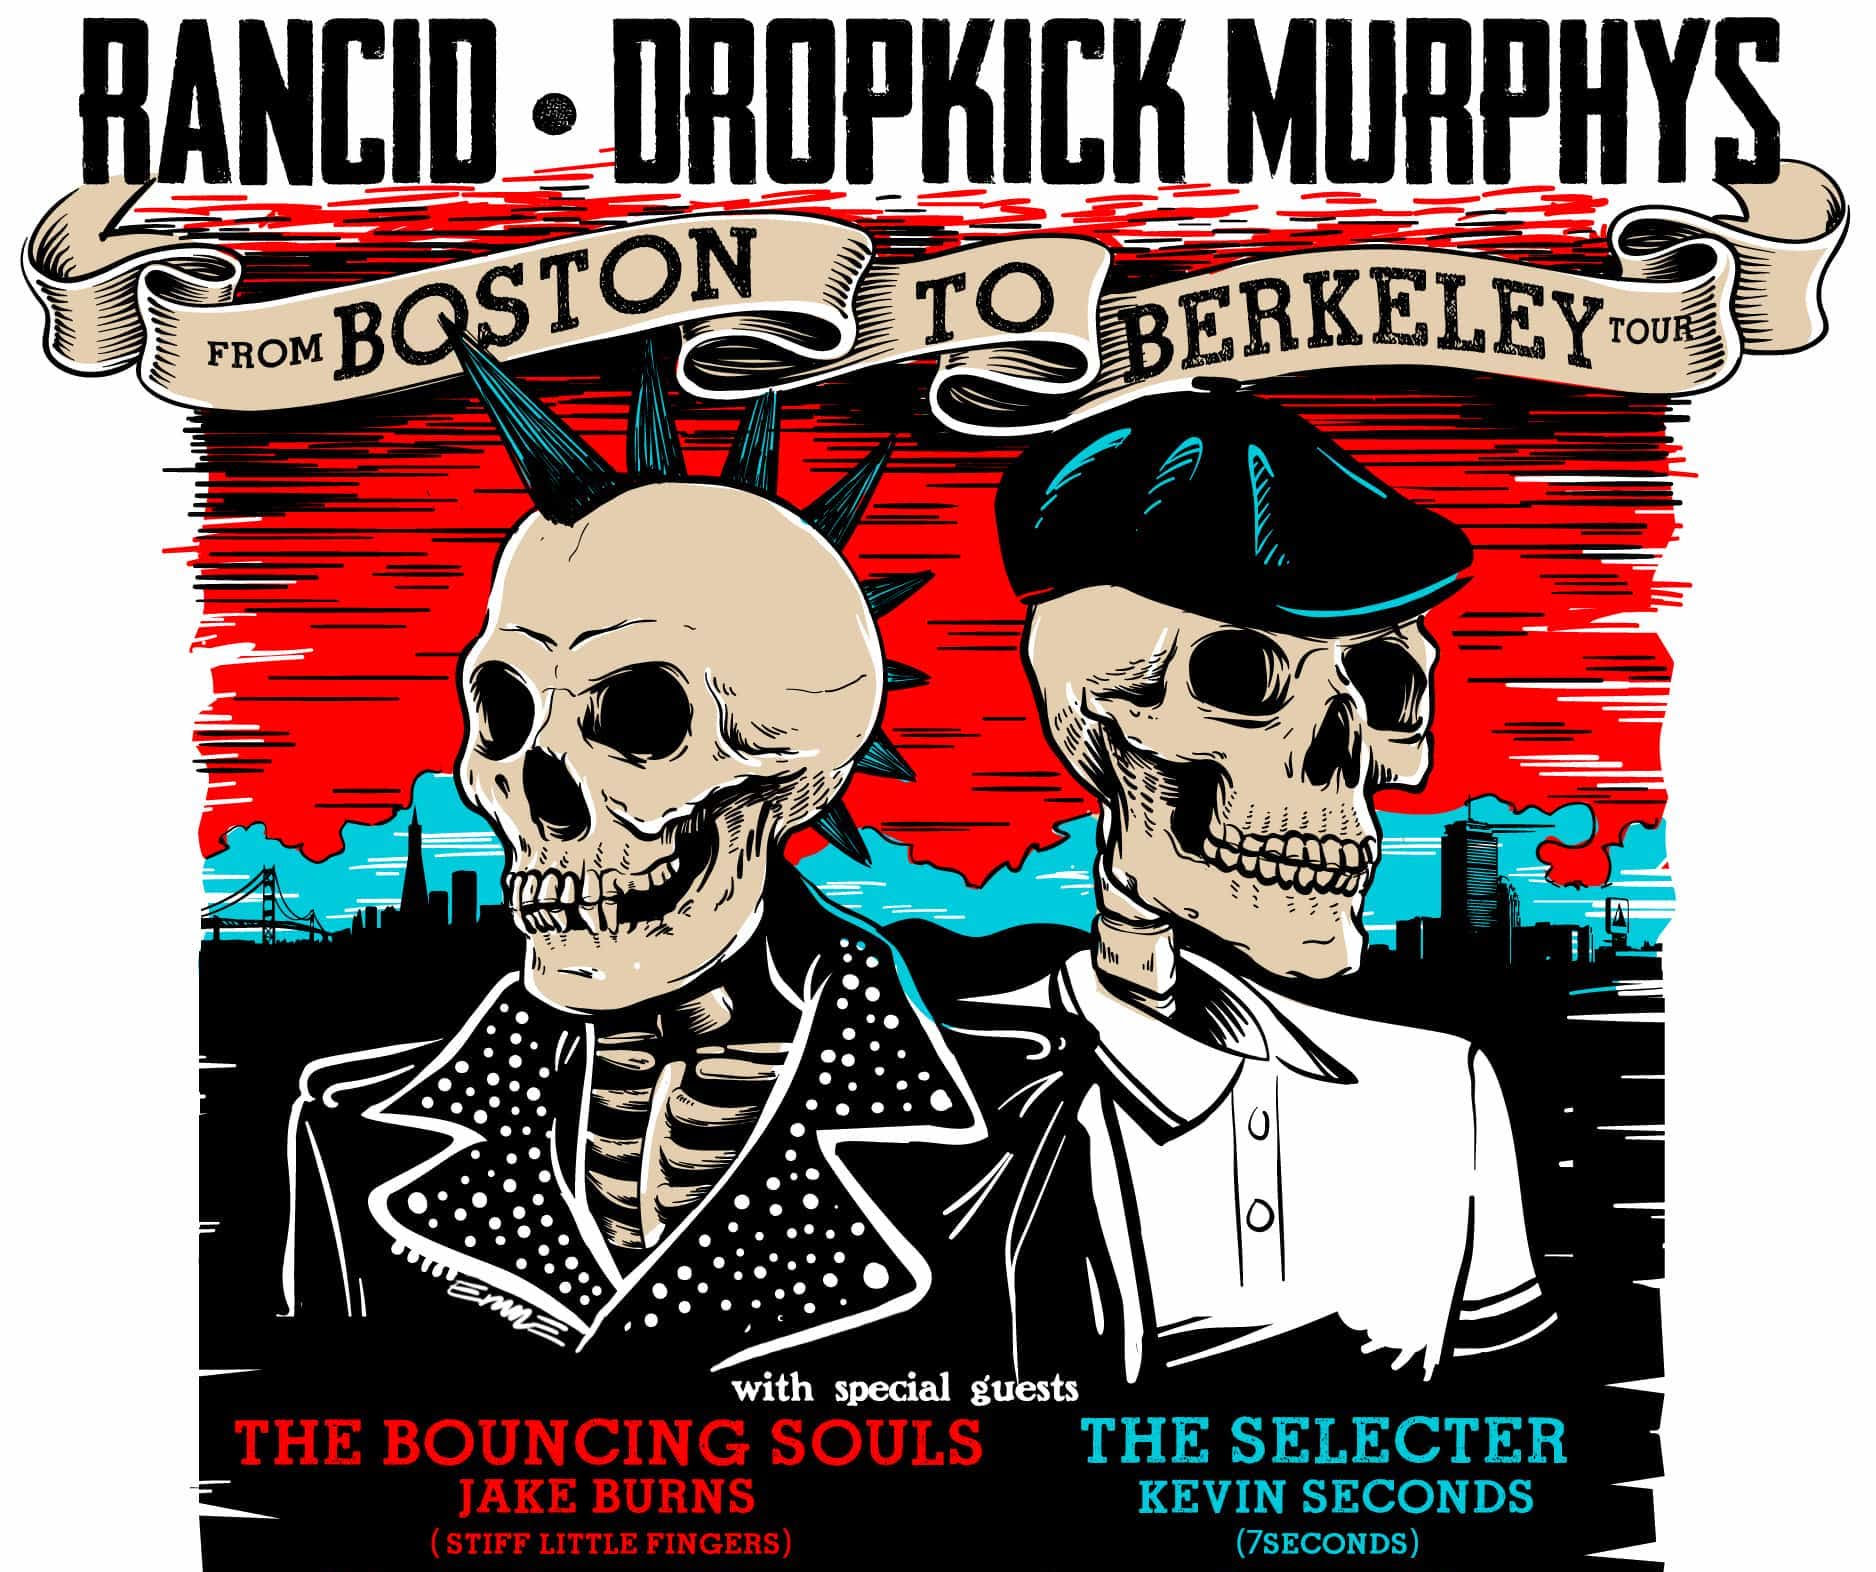 Rancid & Dropkick Murphys From Boston to Berkeley Tour. Photo provided.